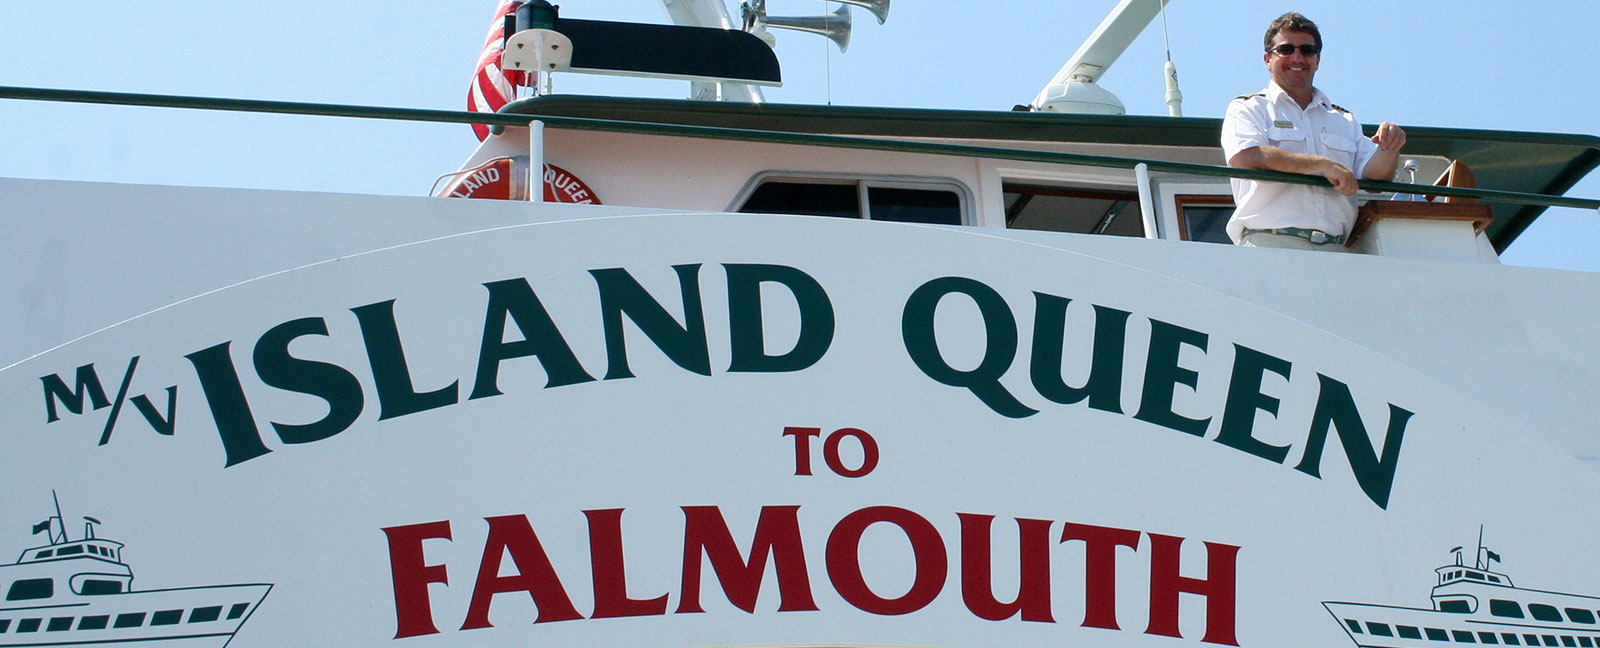 Island Queen Ferry Sign